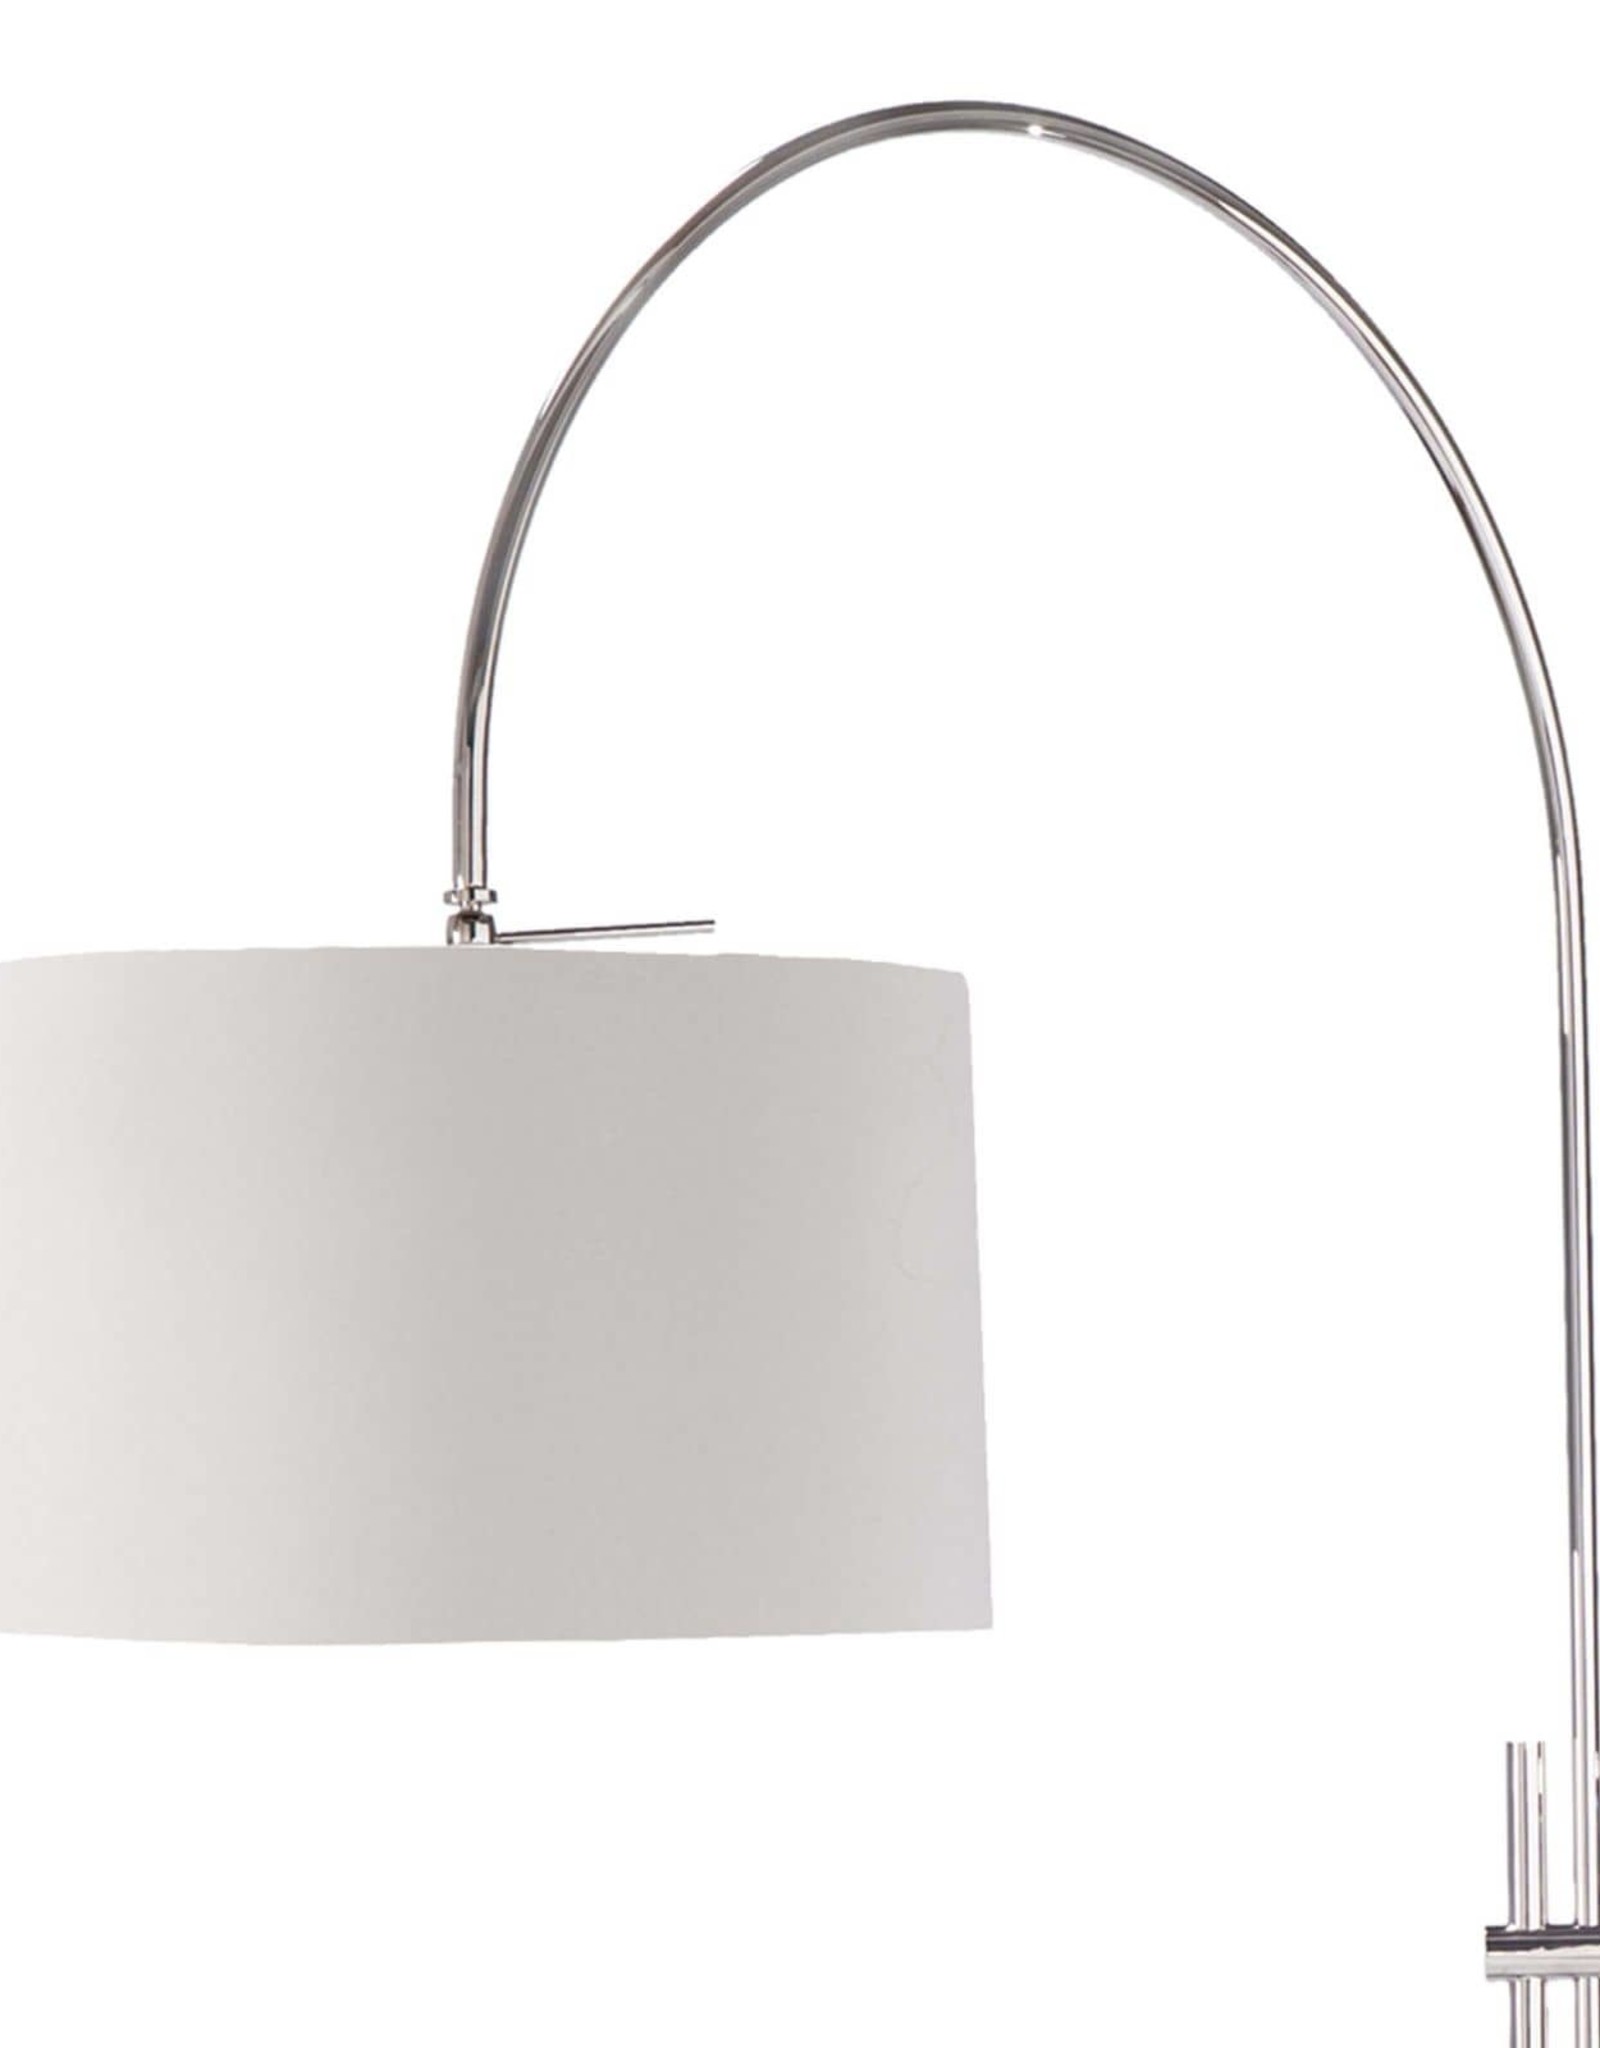 Regina Andrew Design Arc Floor Lamp With Fabric Shade (Polished Nickel)